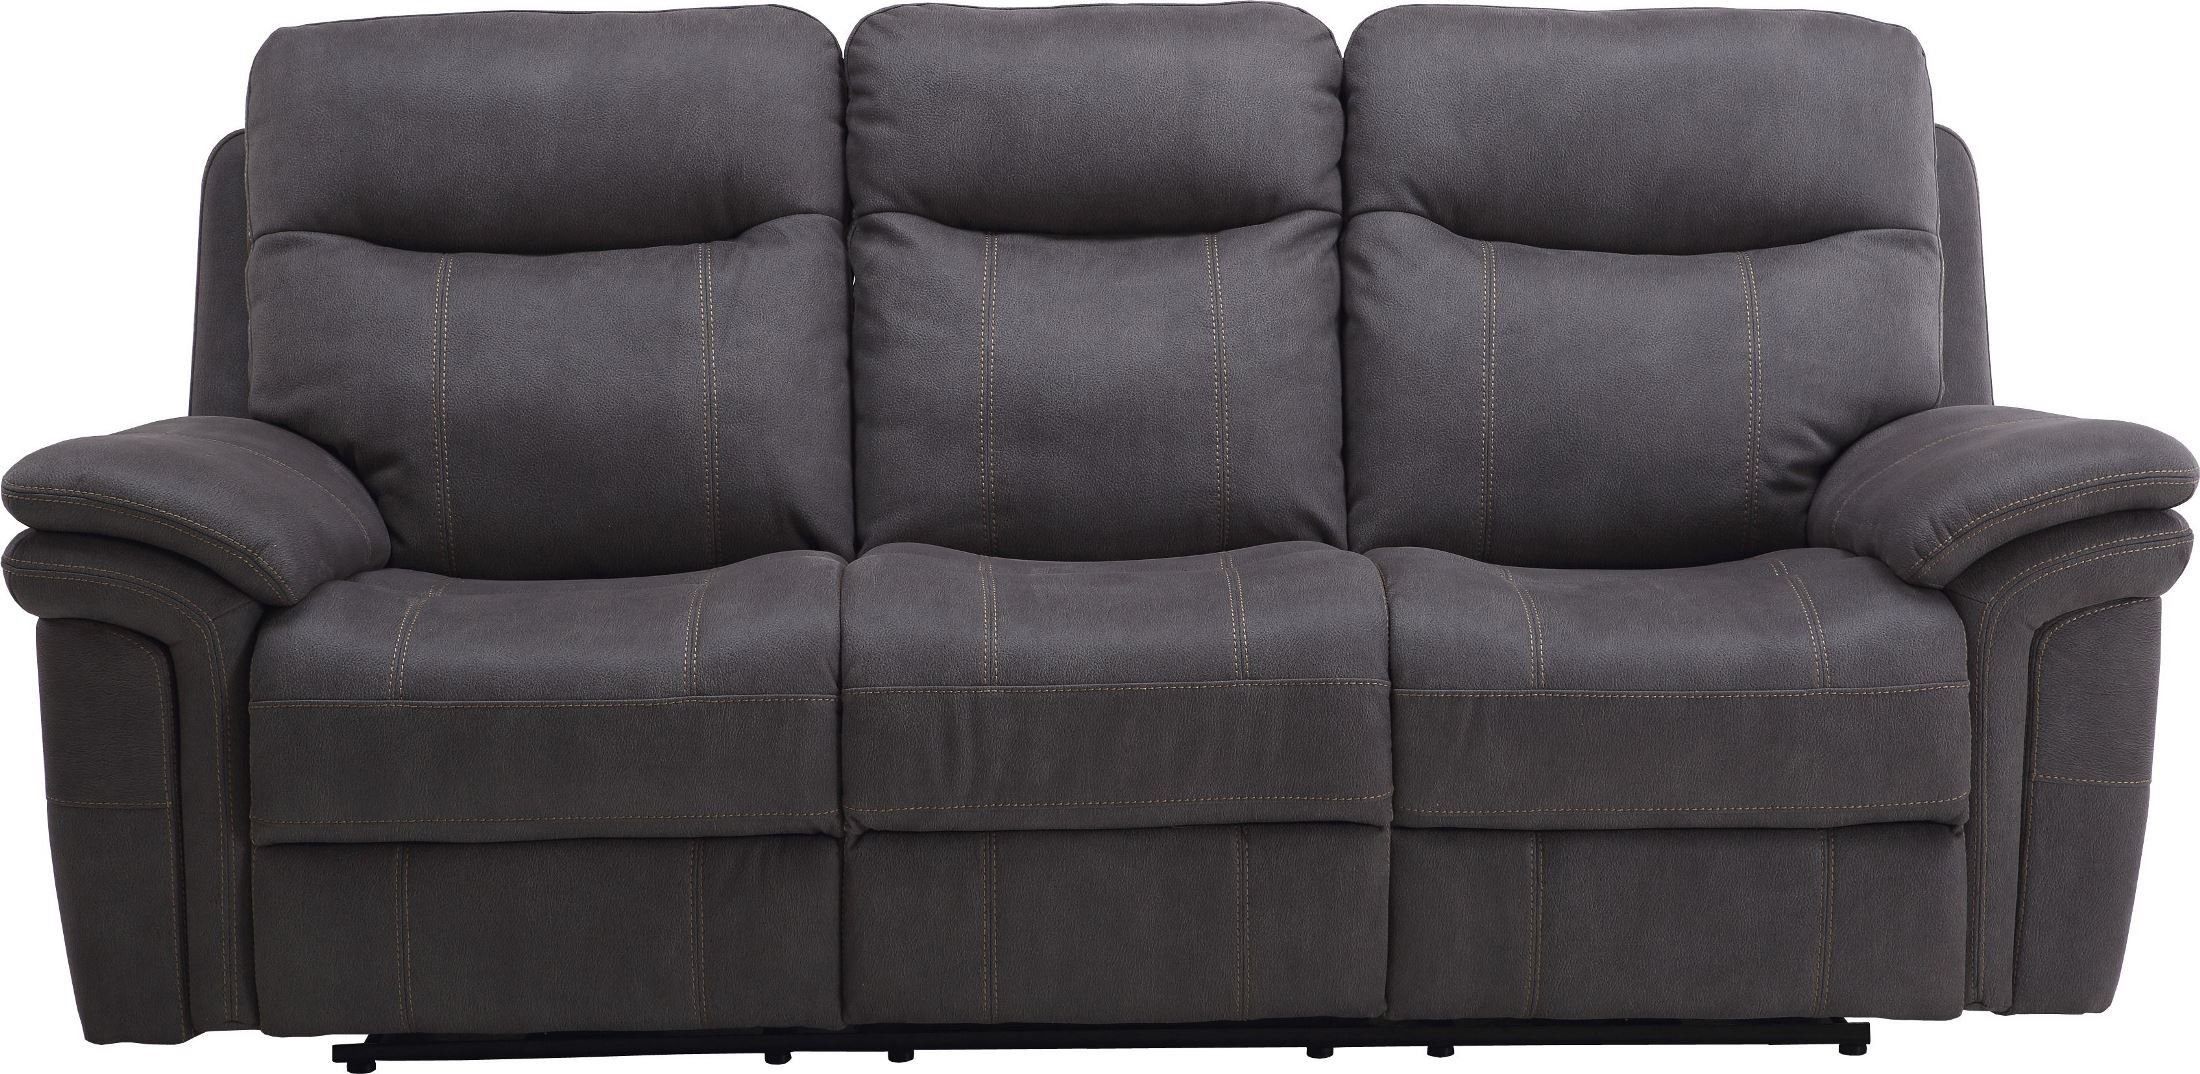 Mason Carbon Dual Power Reclining Sofa From Parker Living In Dual Power Reclining Sofas (View 13 of 15)